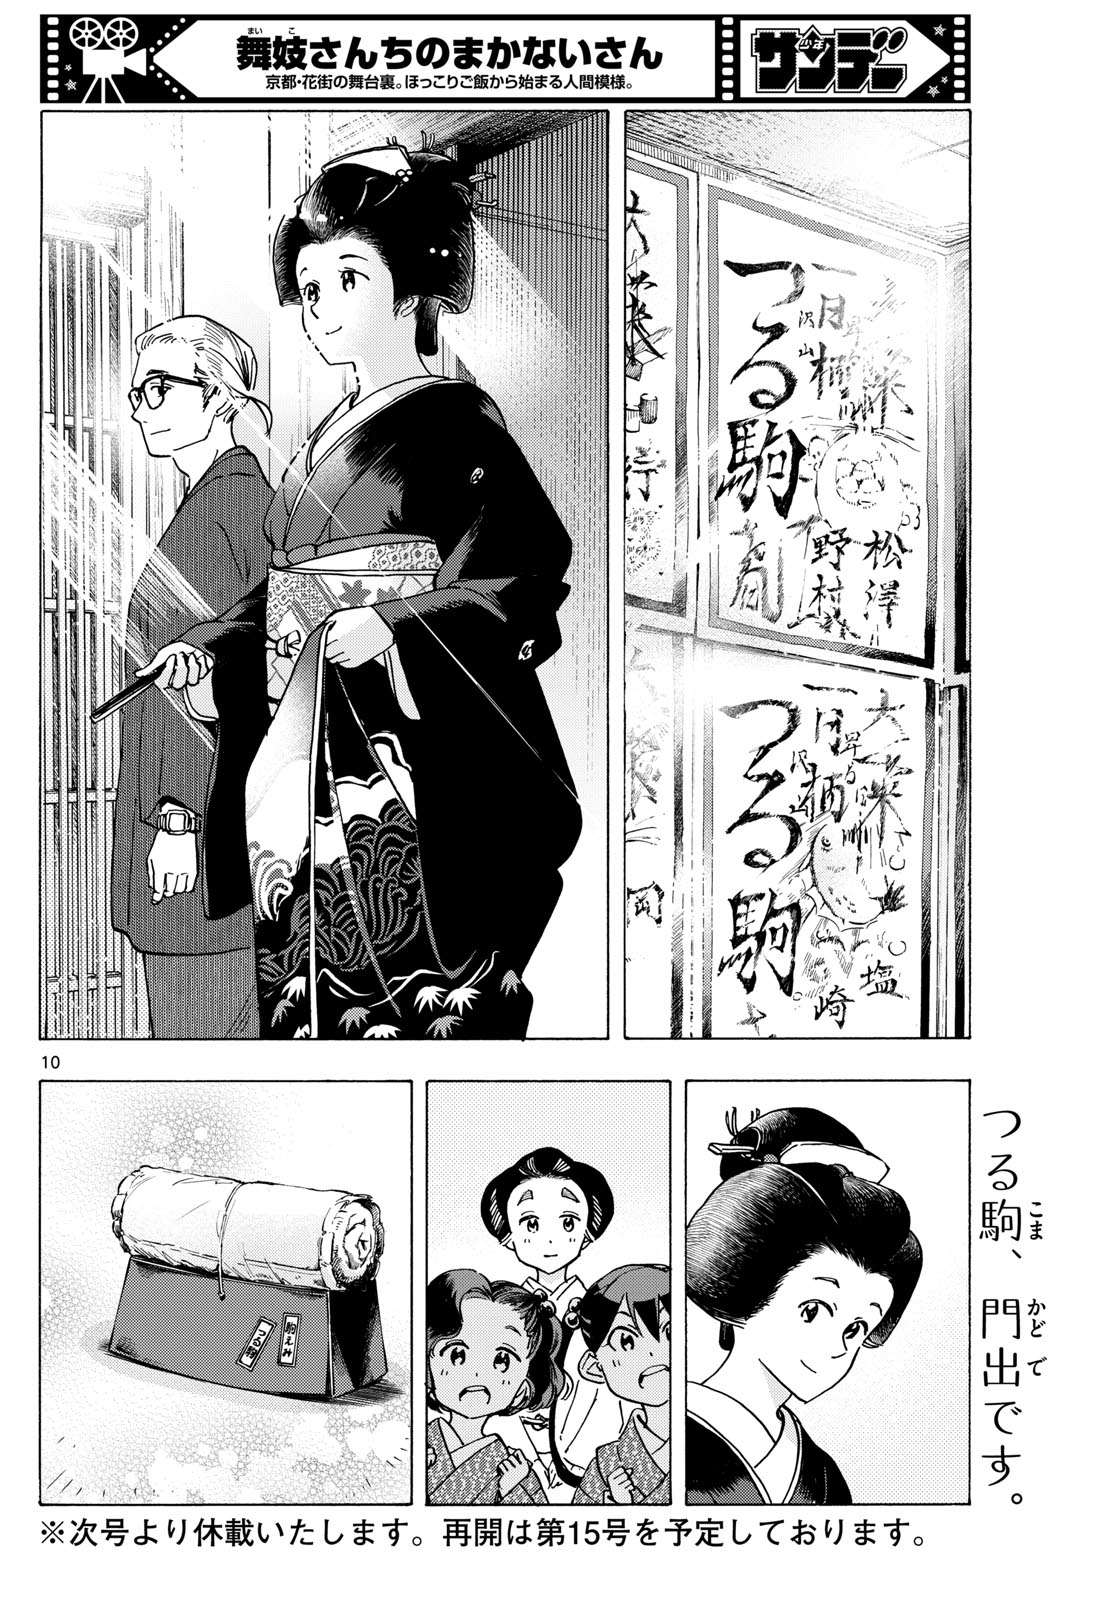 Maiko-san Chi no Makanai-san - Chapter 294 - Page 10